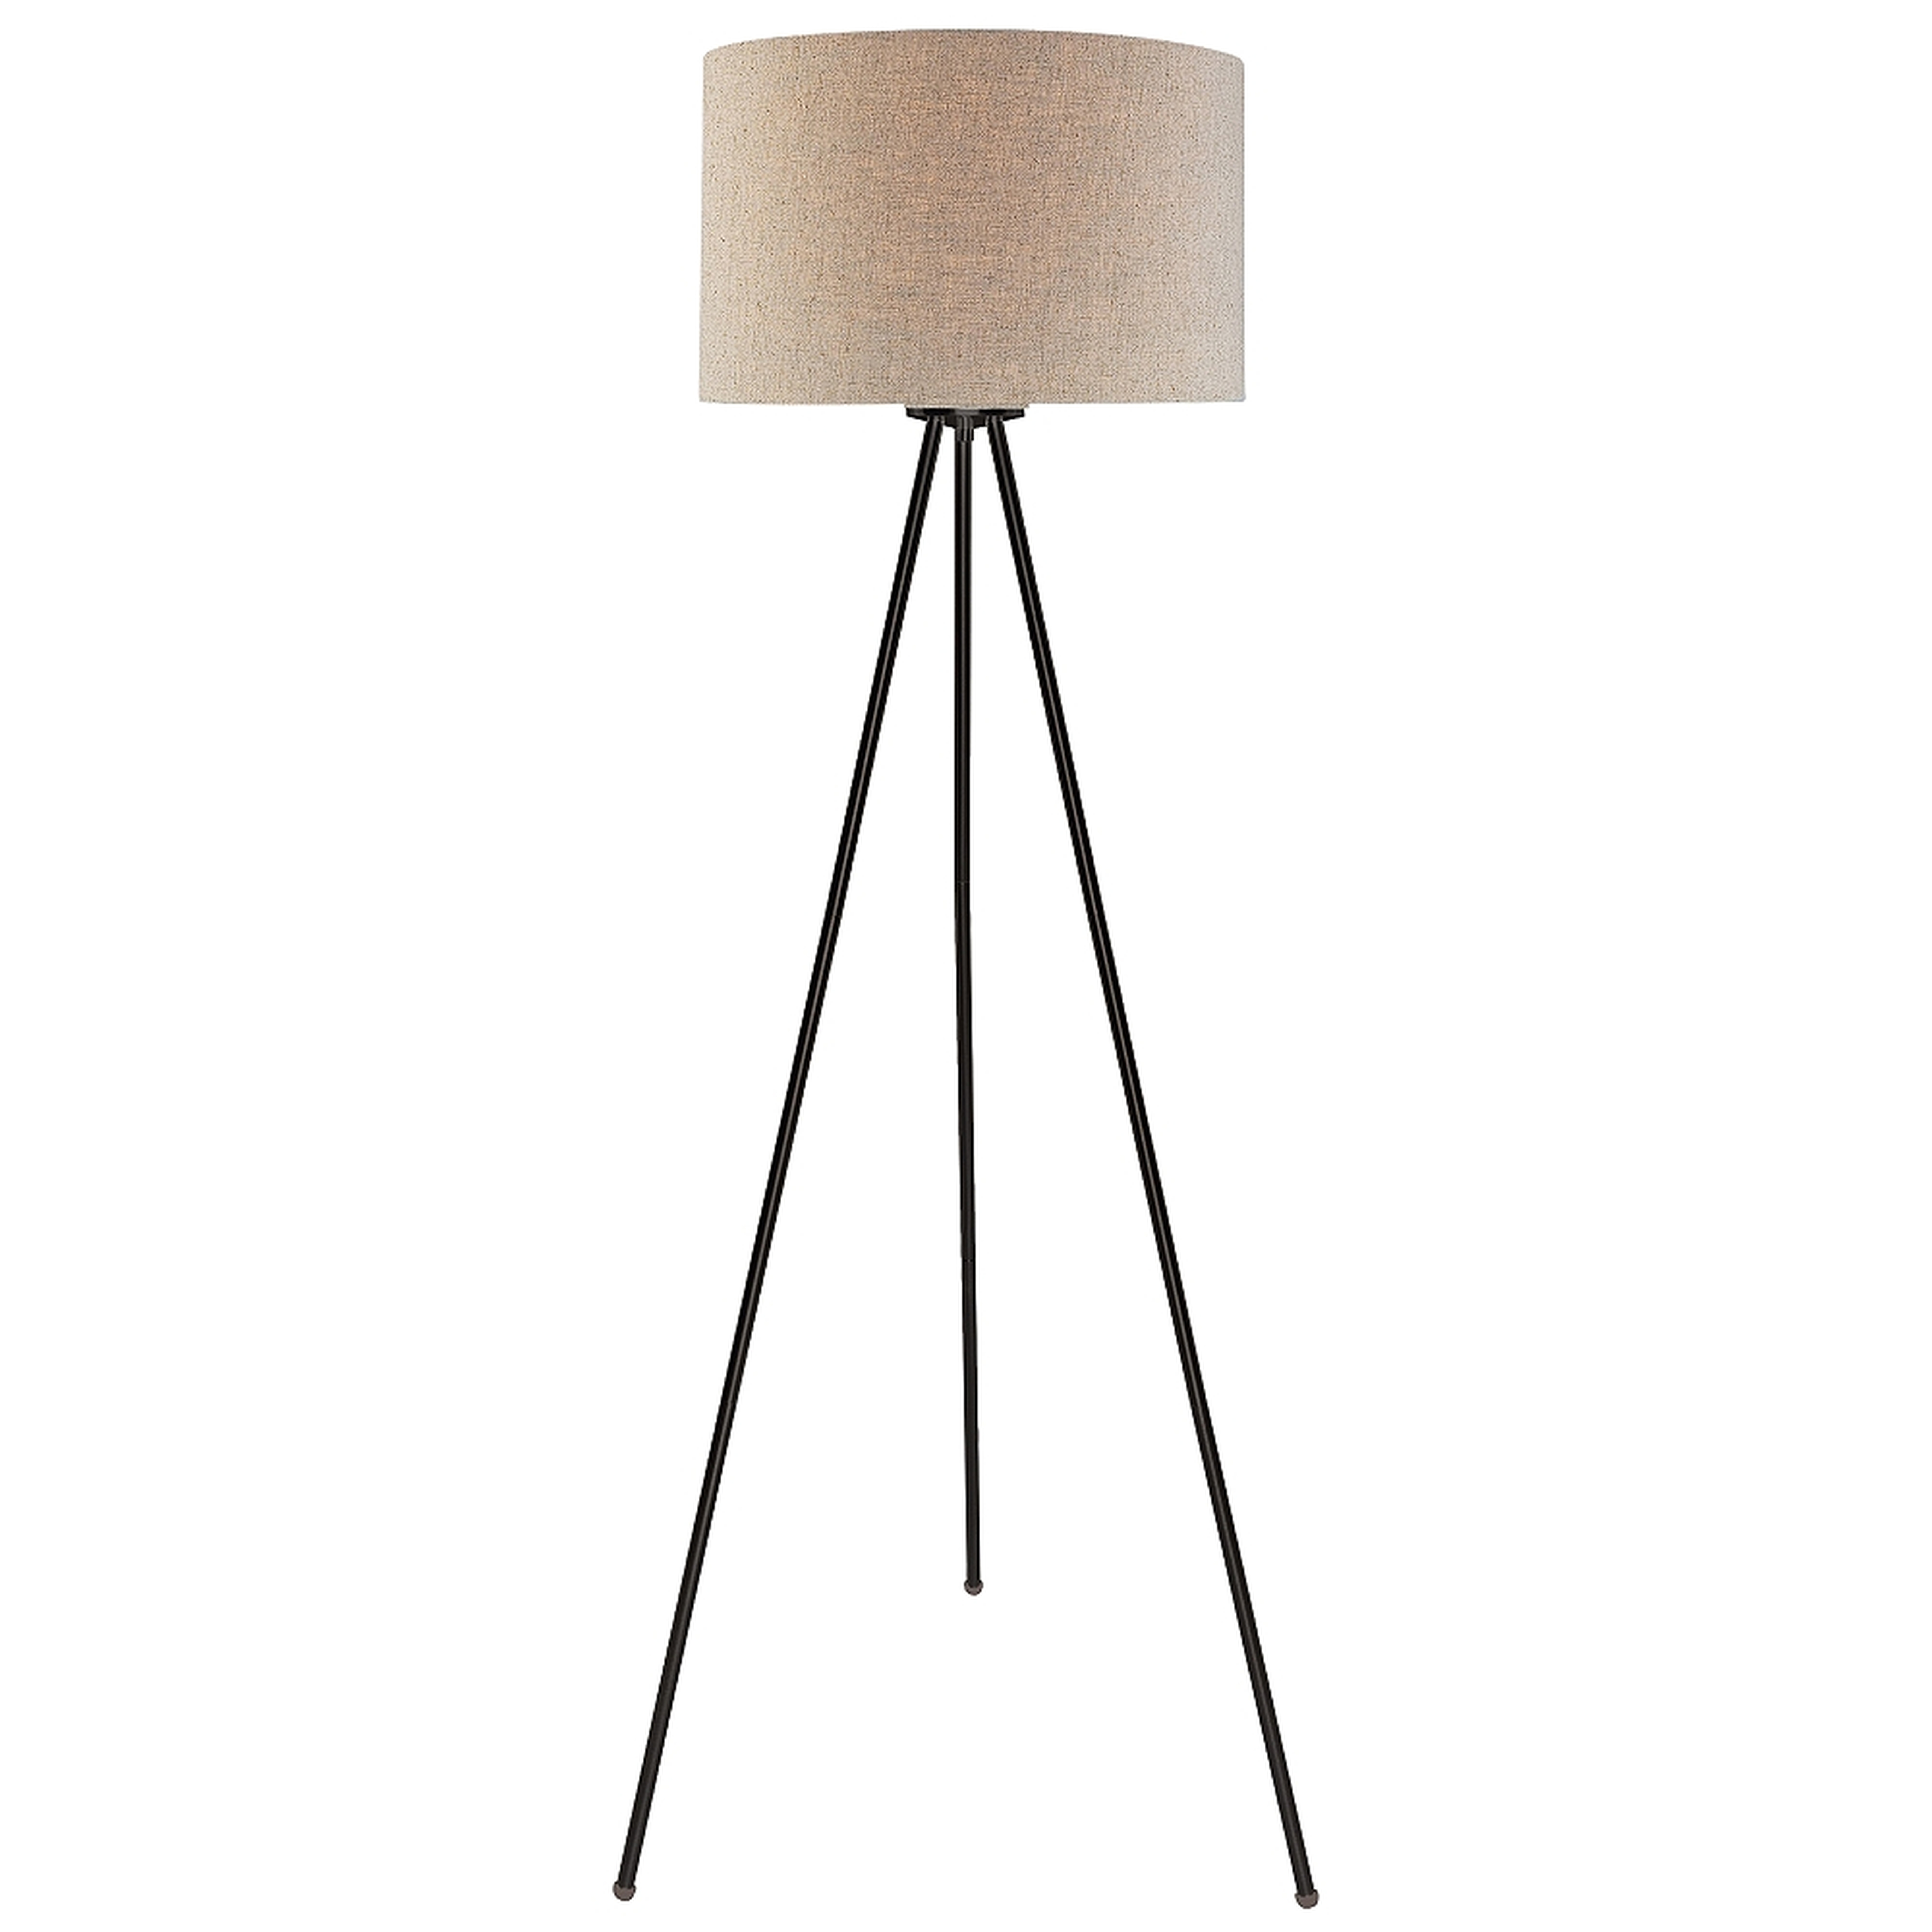 Lite Source Tullio Dark Bronze Tripod Floor Lamp - Style # 33F04 - Lamps Plus